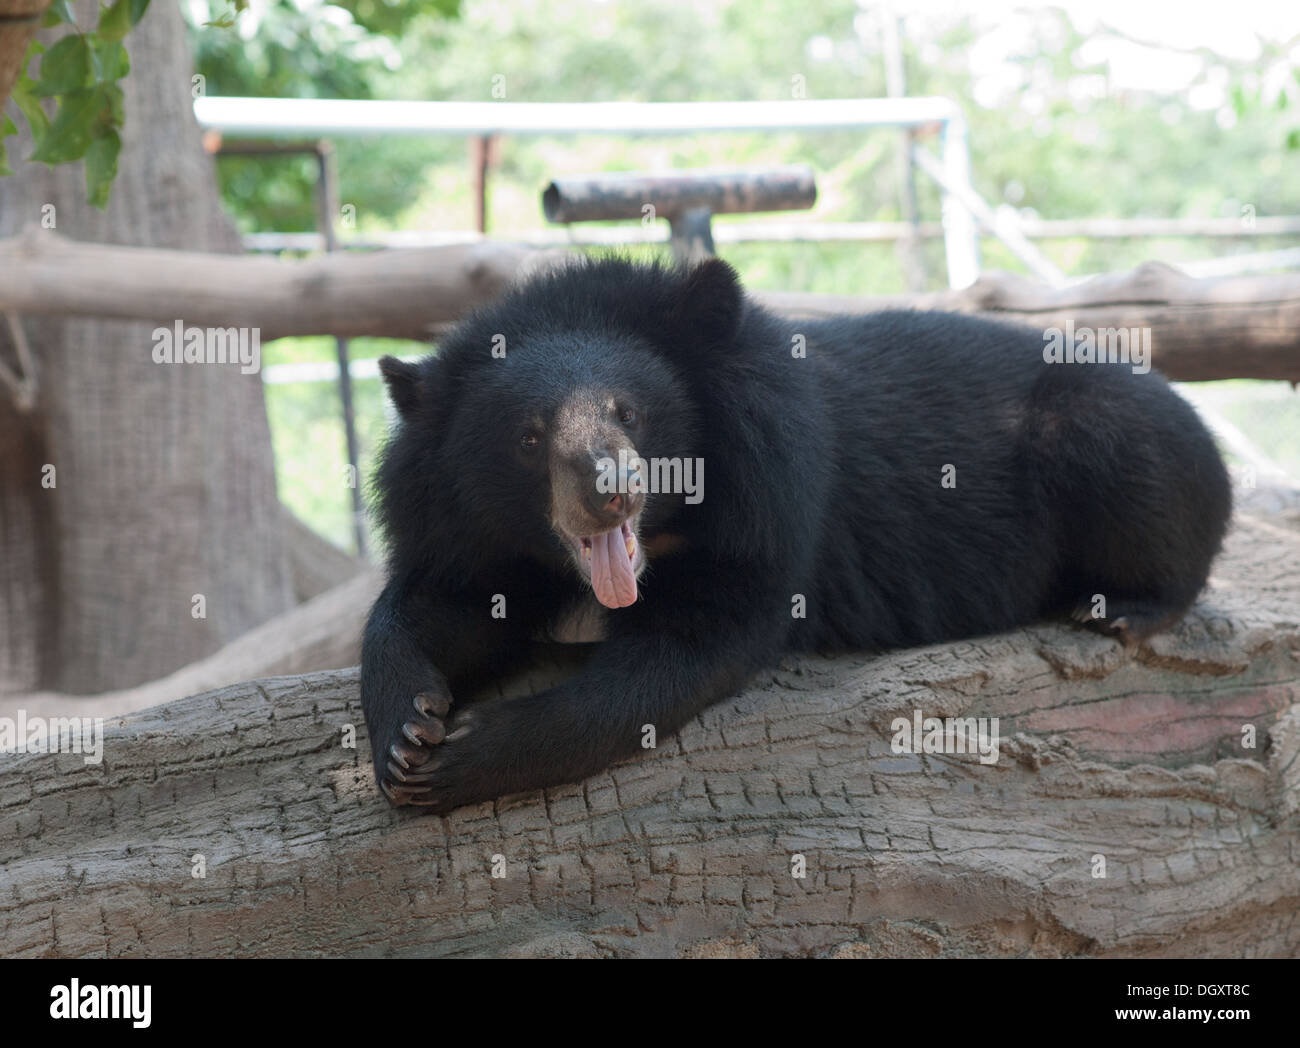 An Asiatic black bear (Ursus thibetanus), a.k.a. a moon bear, at the Phnom Tamao Wildlife Rescue Center in Phnom Tamao, Cambodia Stock Photo